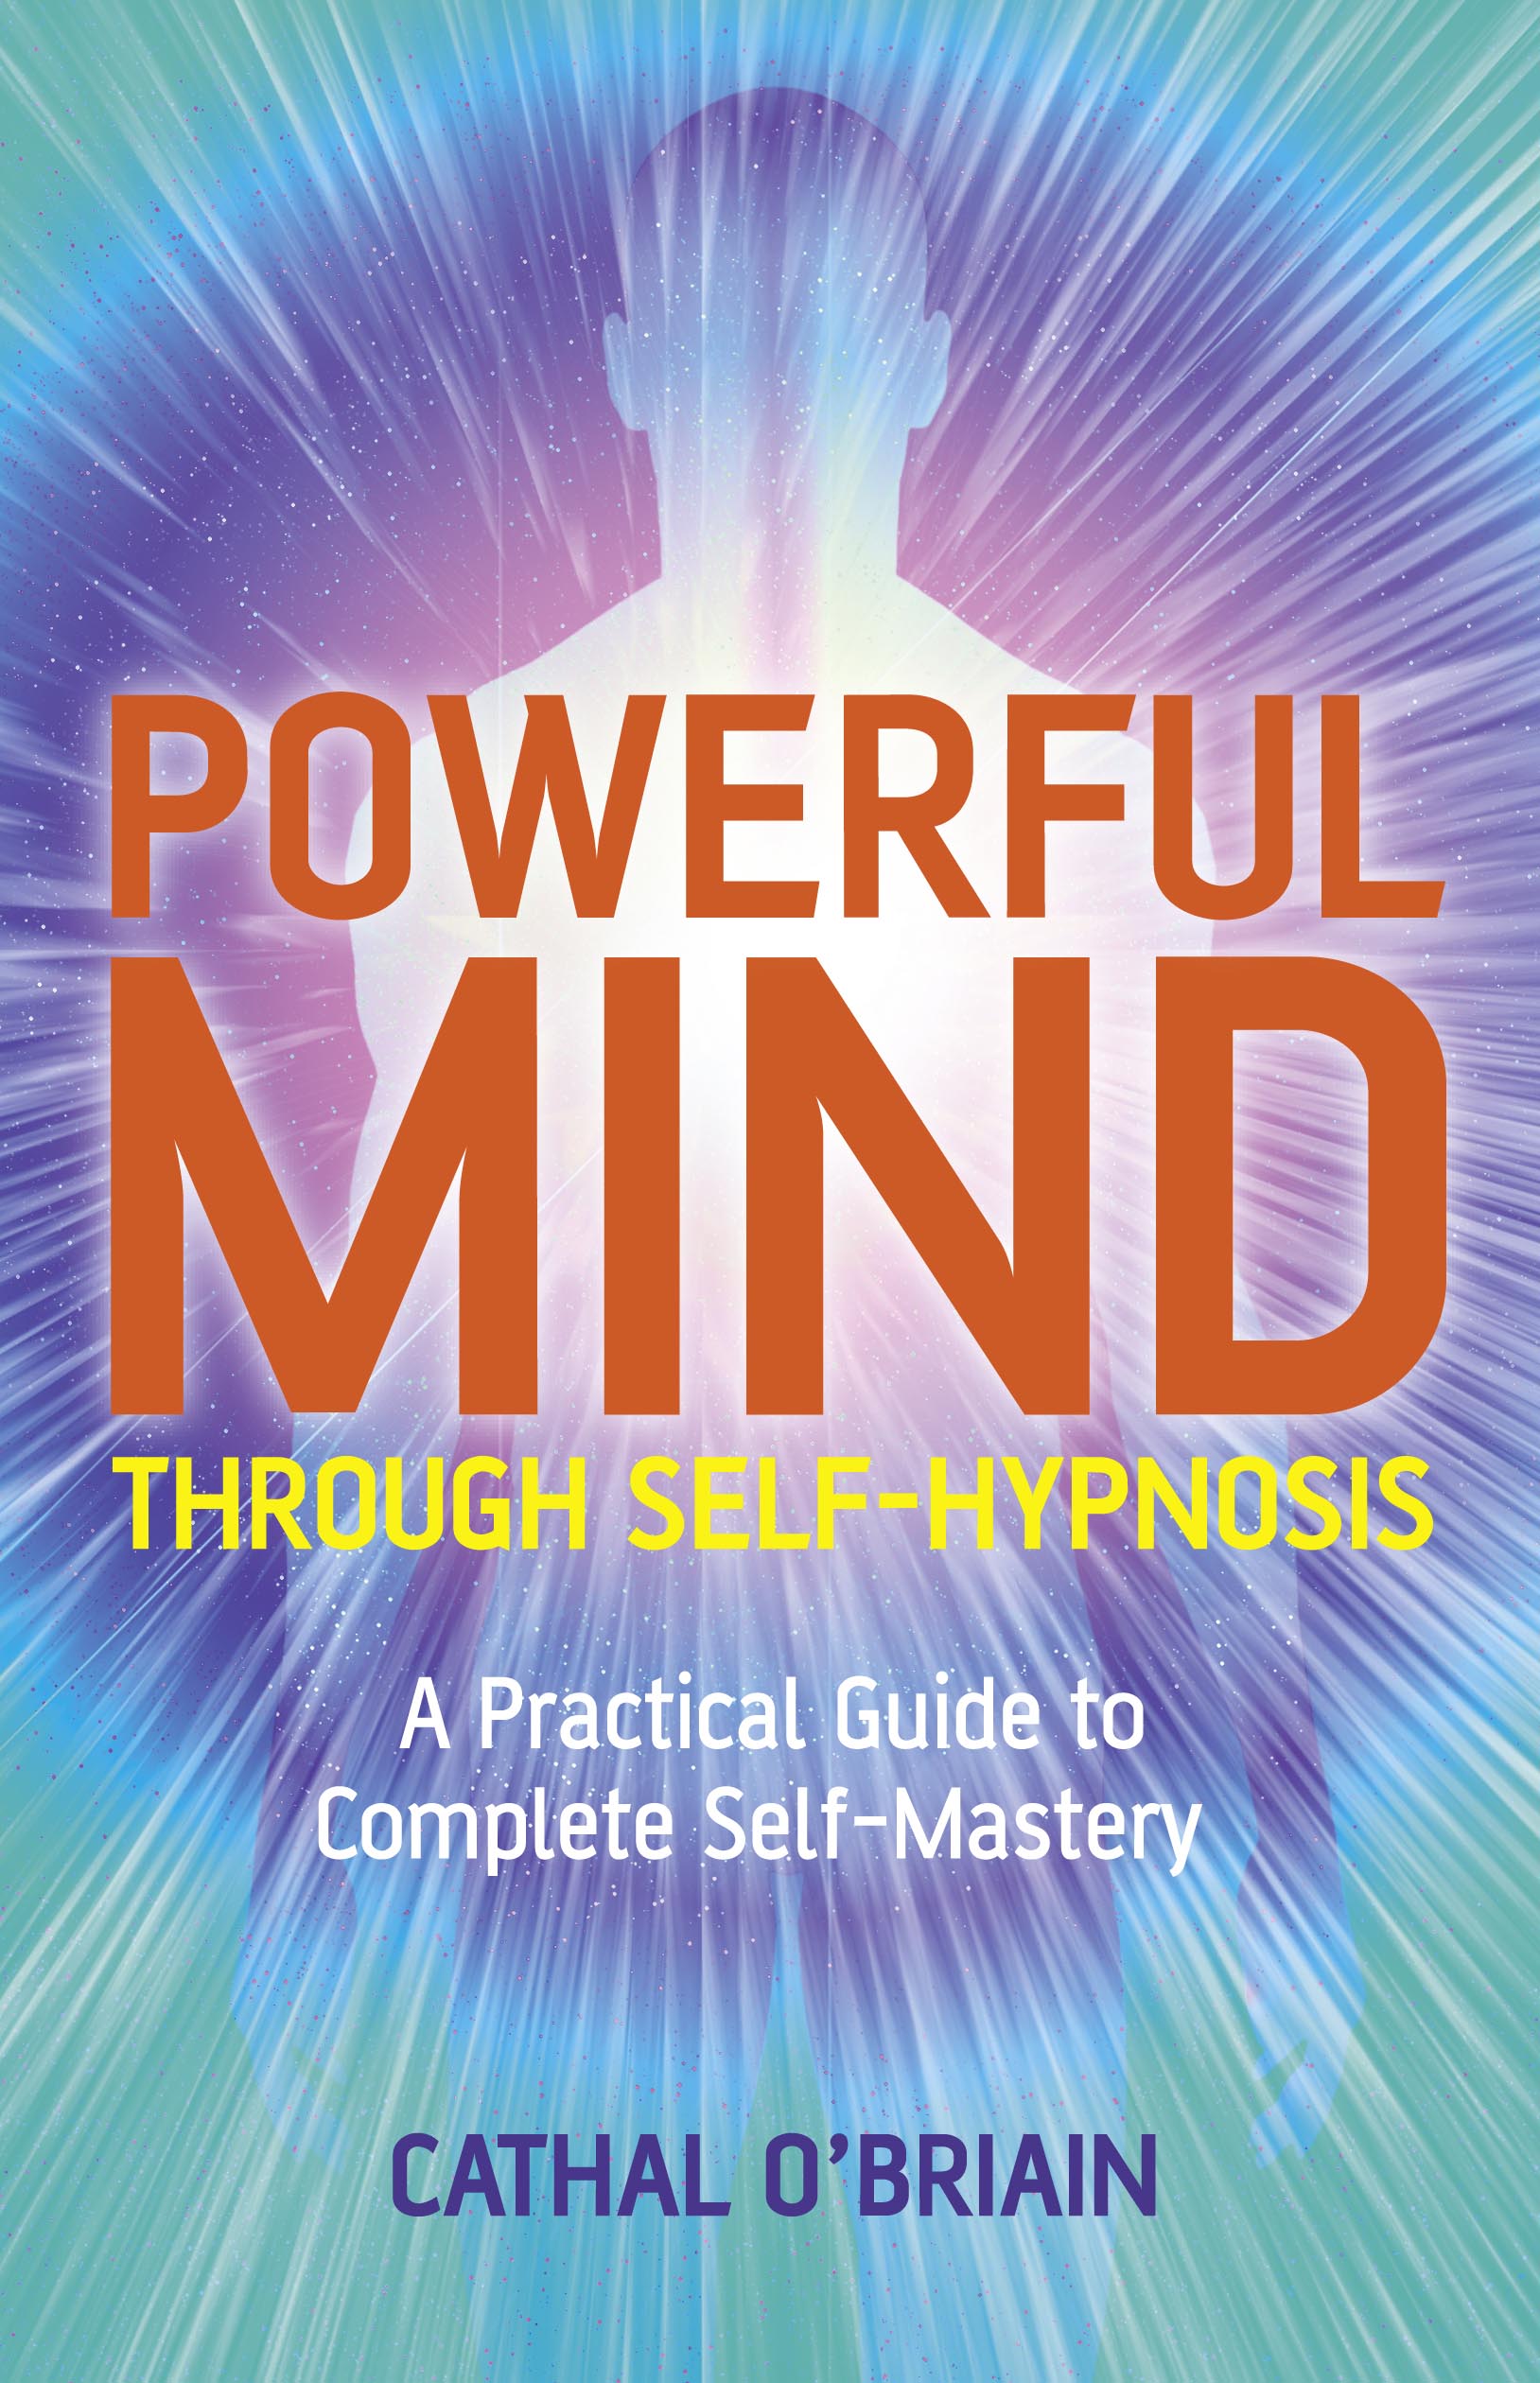 Powerful Mind Through Self-Hypnosis - 10-14.99